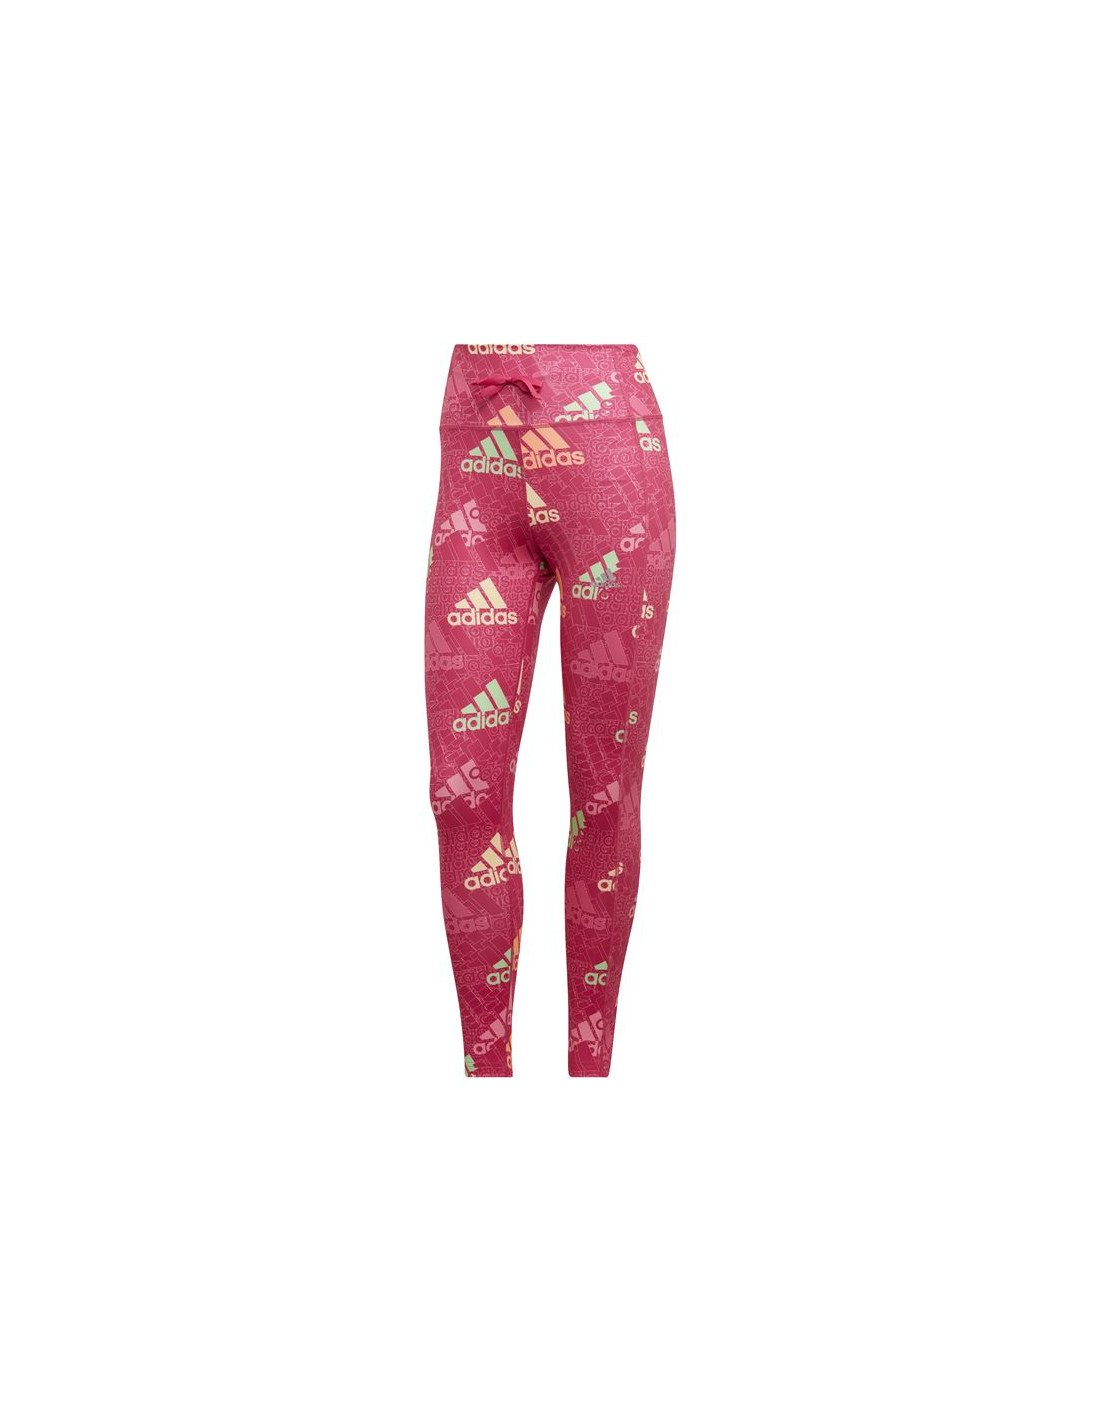 Pantalones de running adidas brand love mujer pink